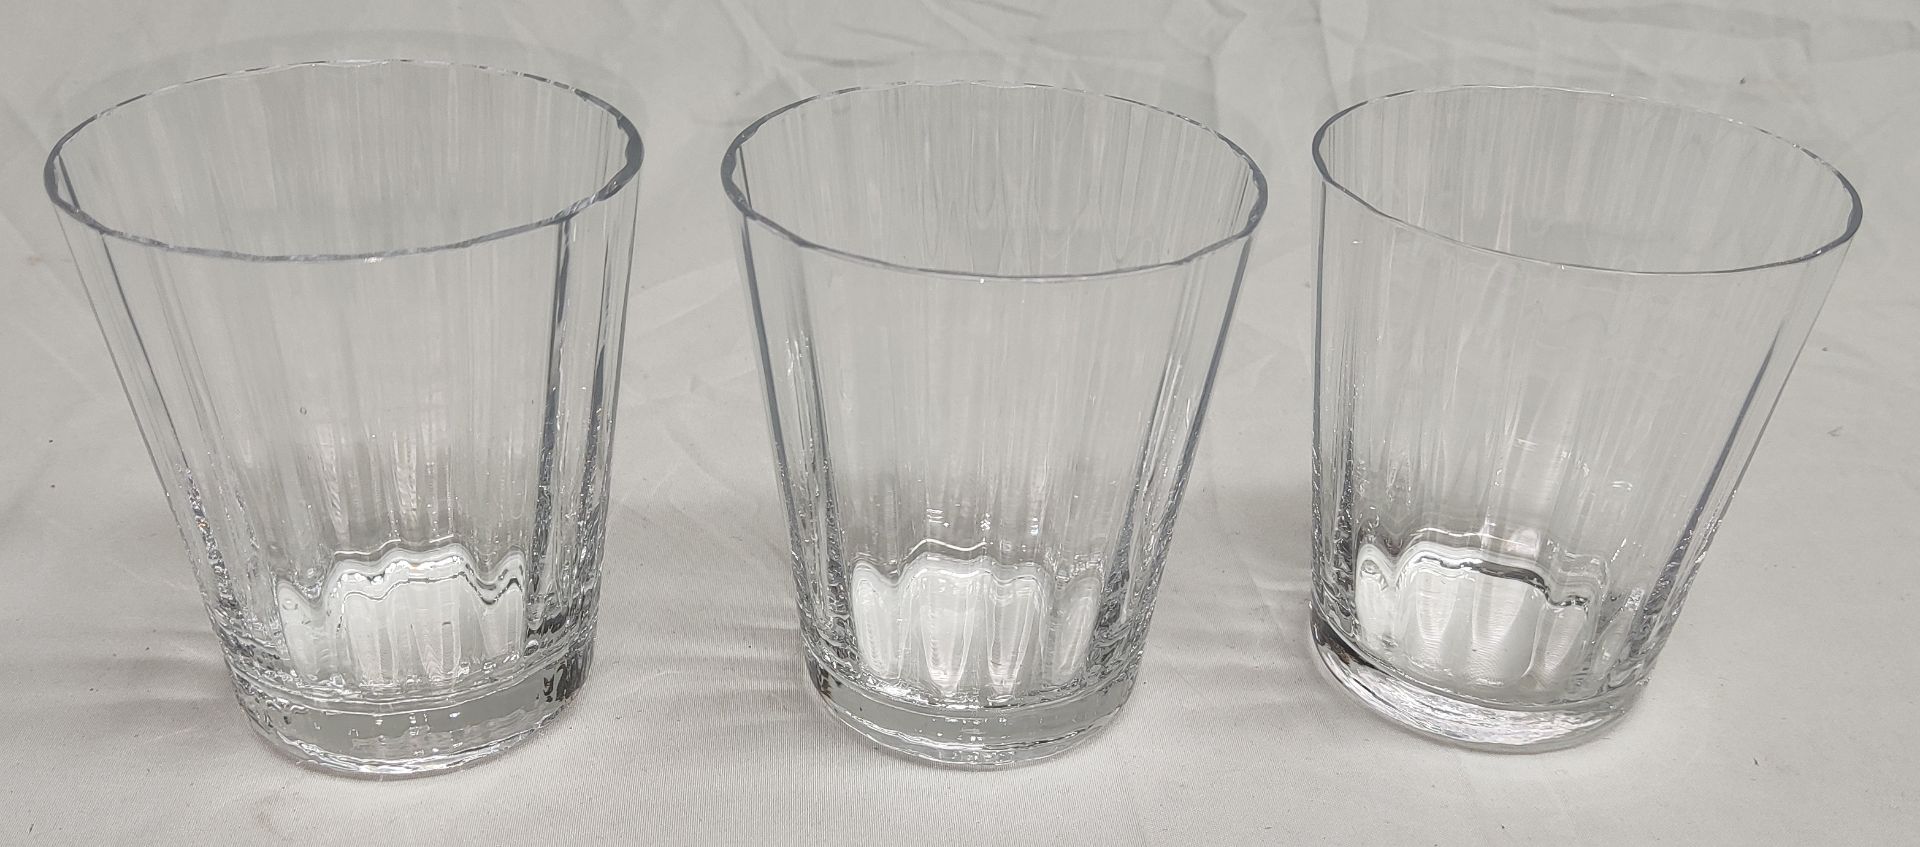 3 x SOHO HOME Pembroke Low Ball Glasses - New/Boxed - Original RRP £70 - Ref: 6909149/HJL368/C19/ - Image 3 of 11